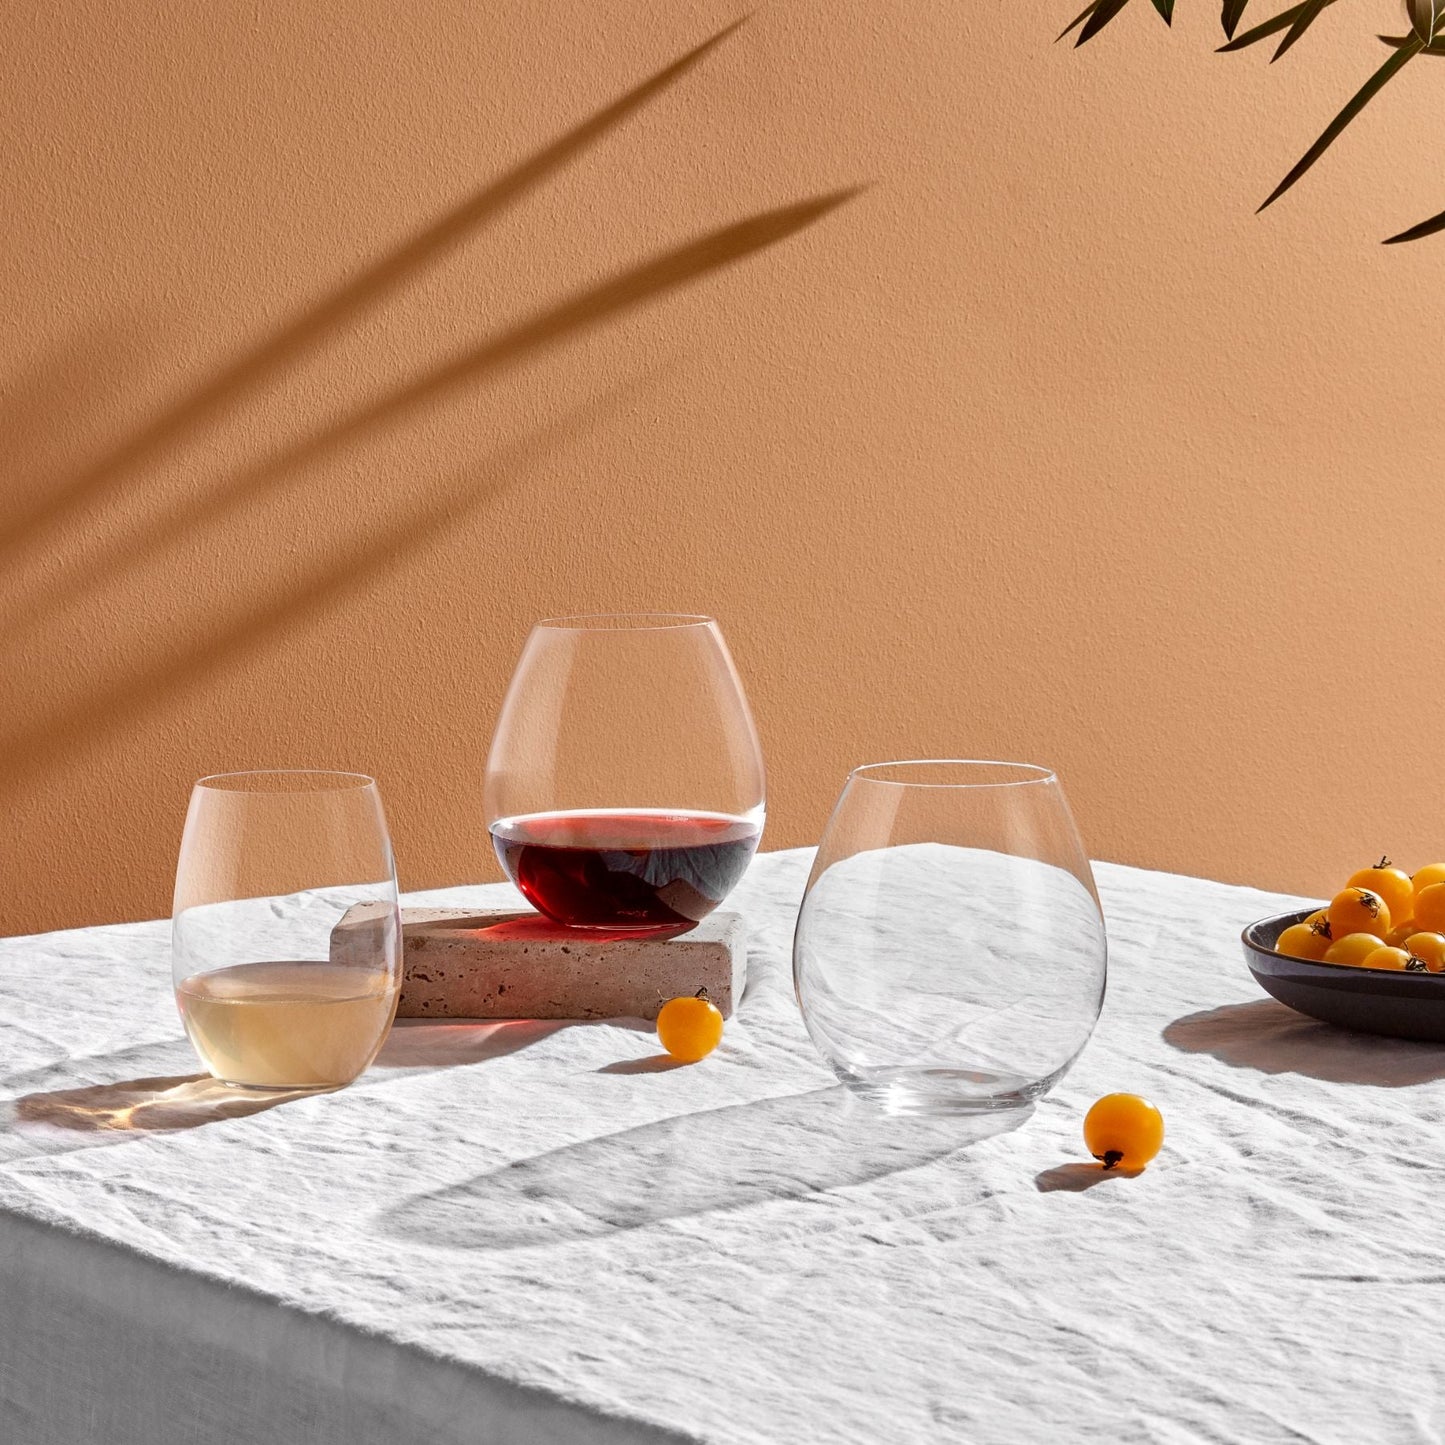 Pure Bourgogne Glass (Set of 8)